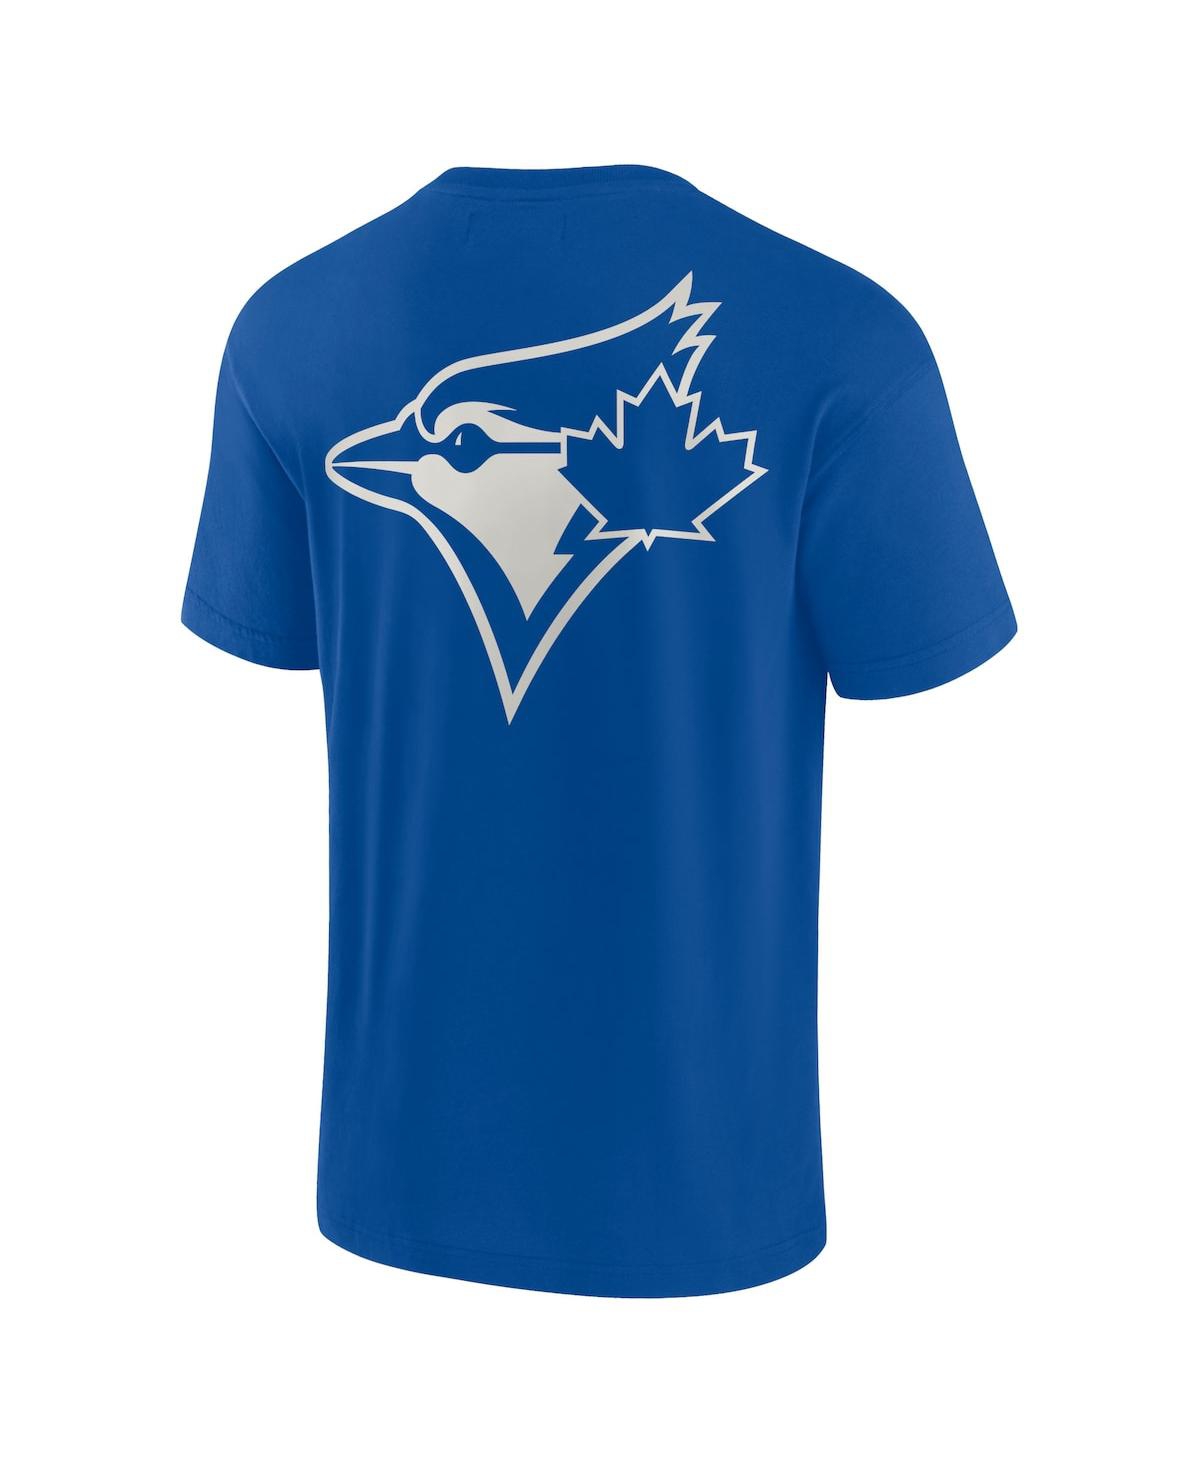 Shop Fanatics Signature Men's And Women's  Royal Toronto Blue Jays Super Soft Short Sleeve T-shirt